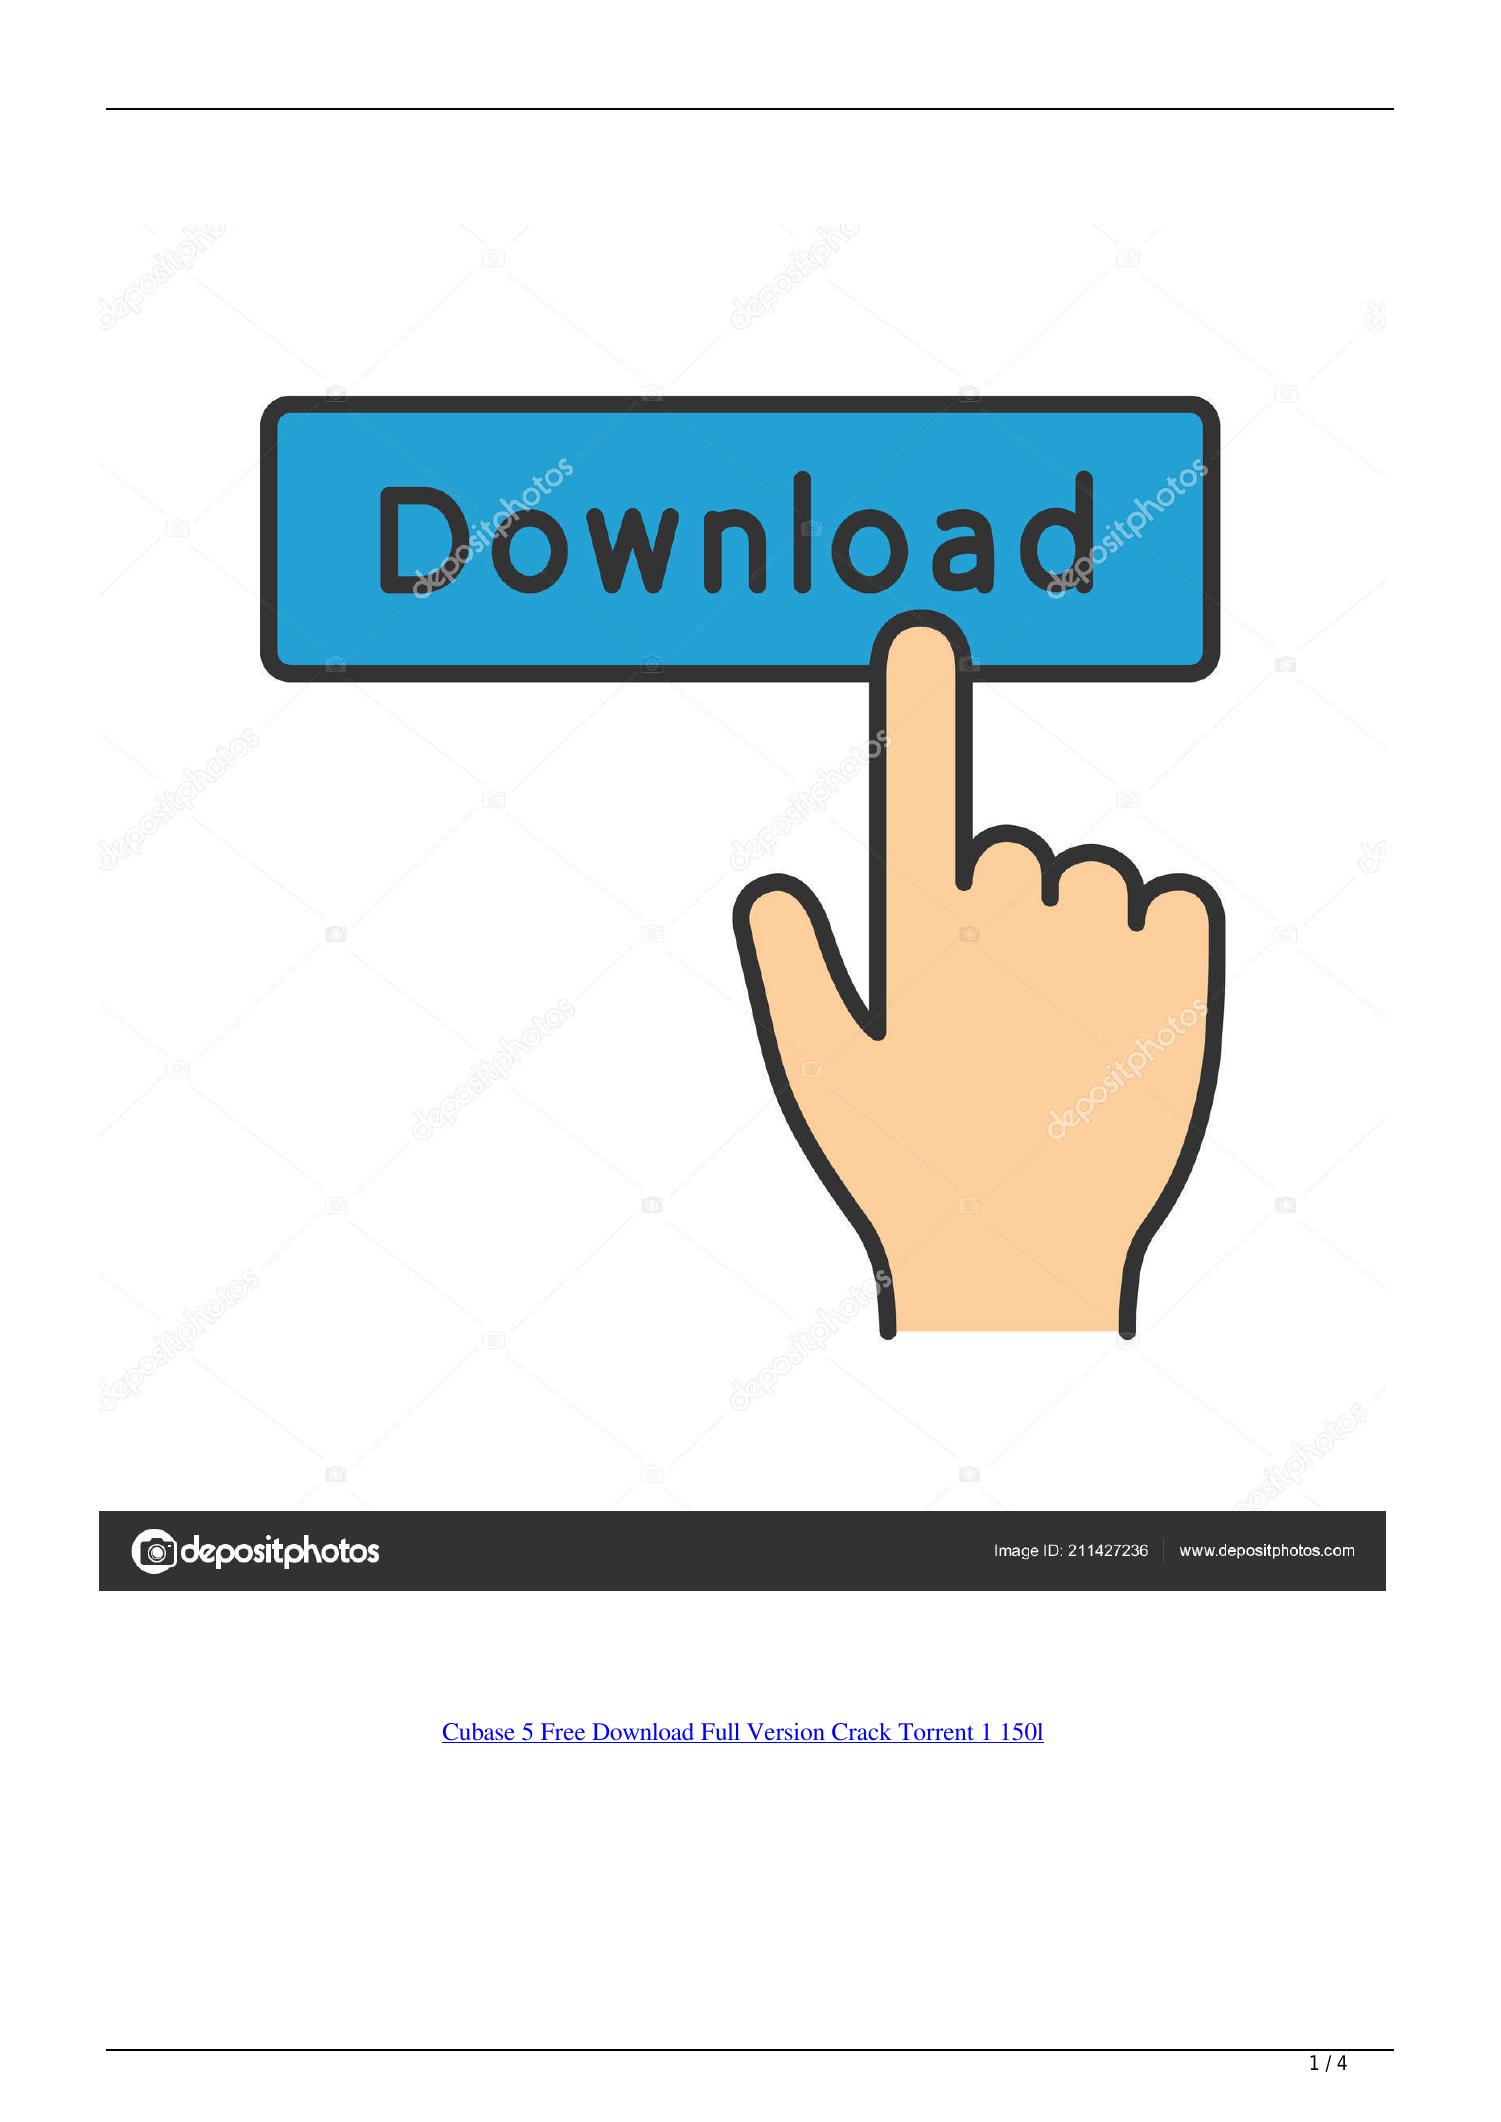 Download cubase 5 free full version